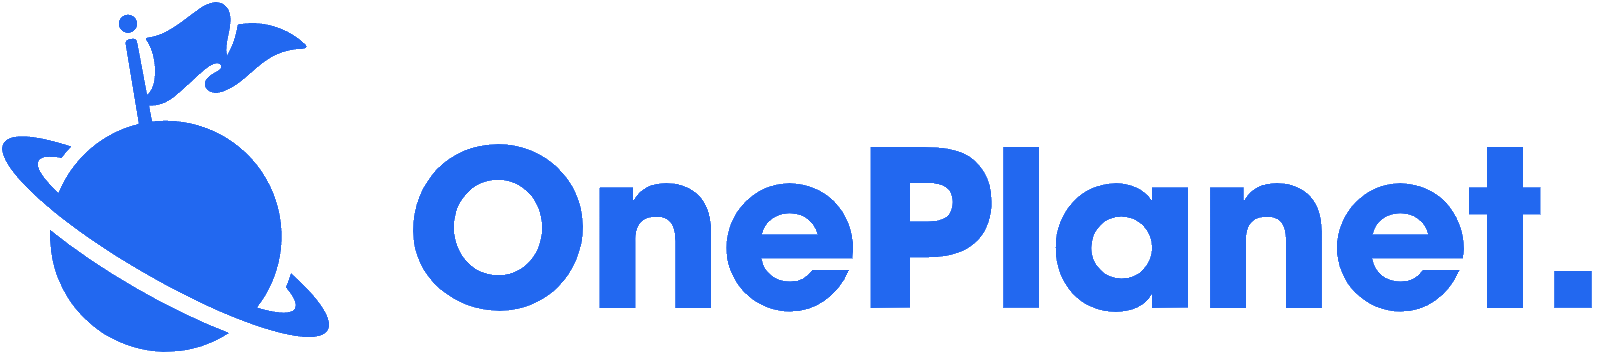 One Planet logo